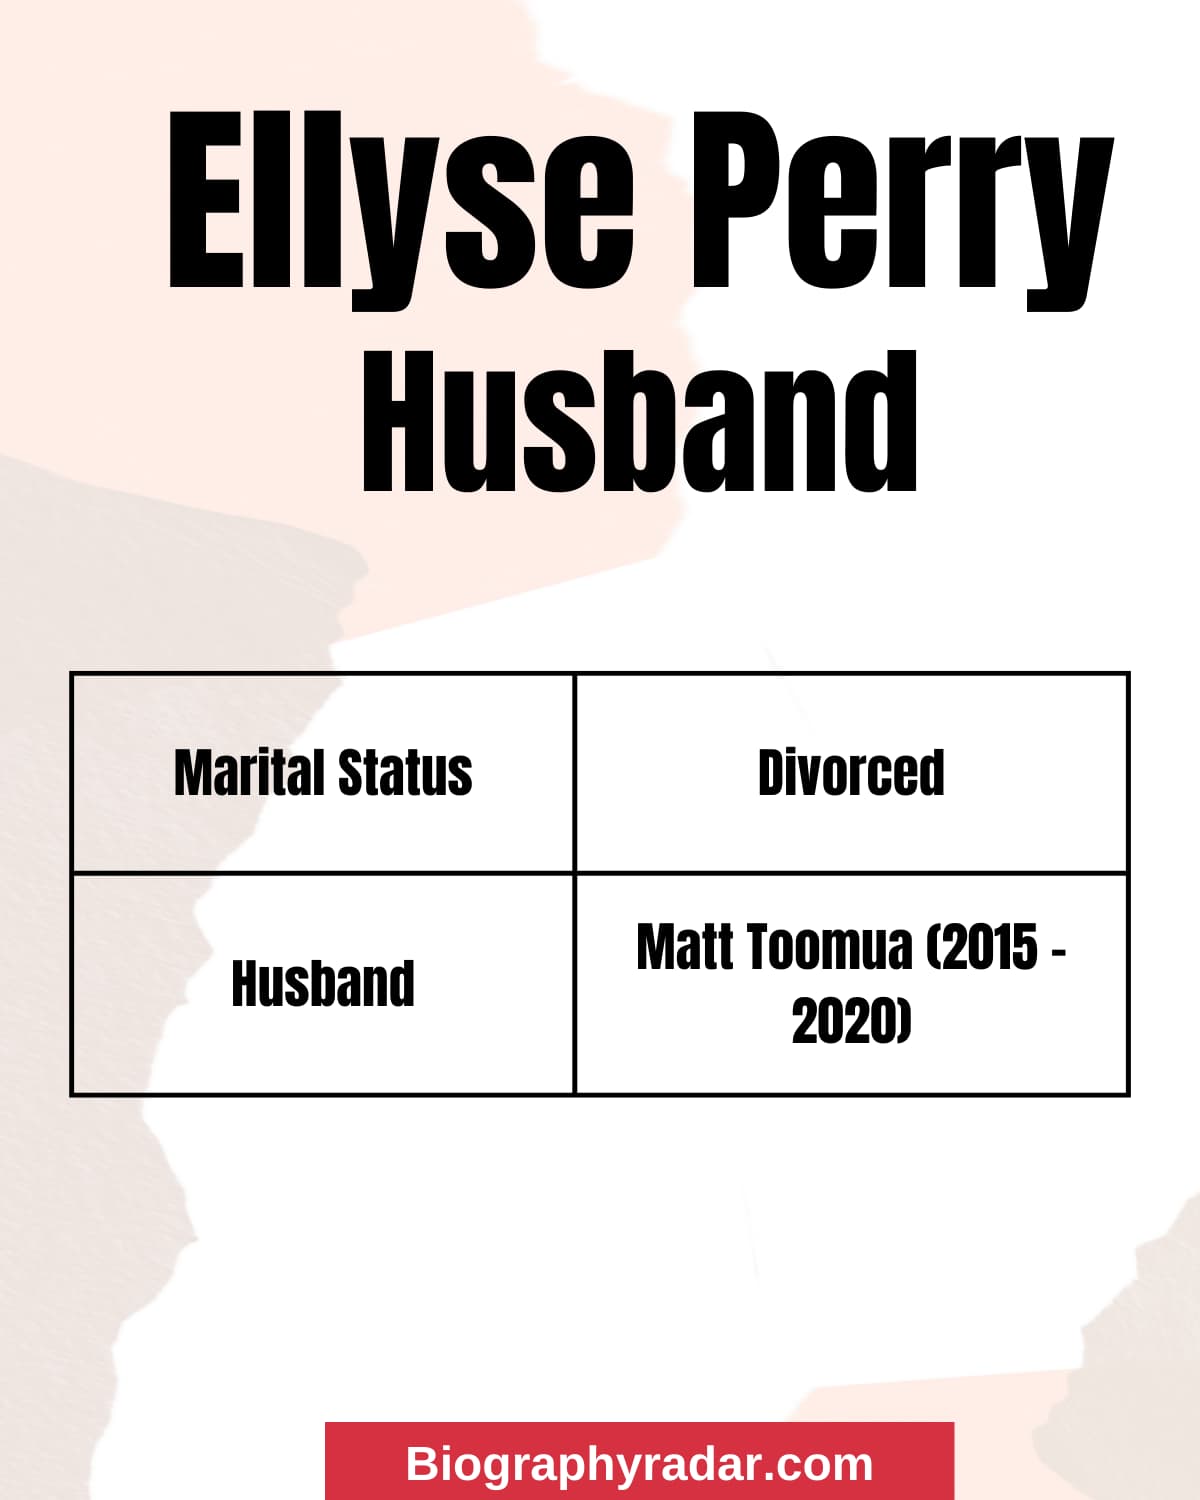 Ellyse Perry Husband